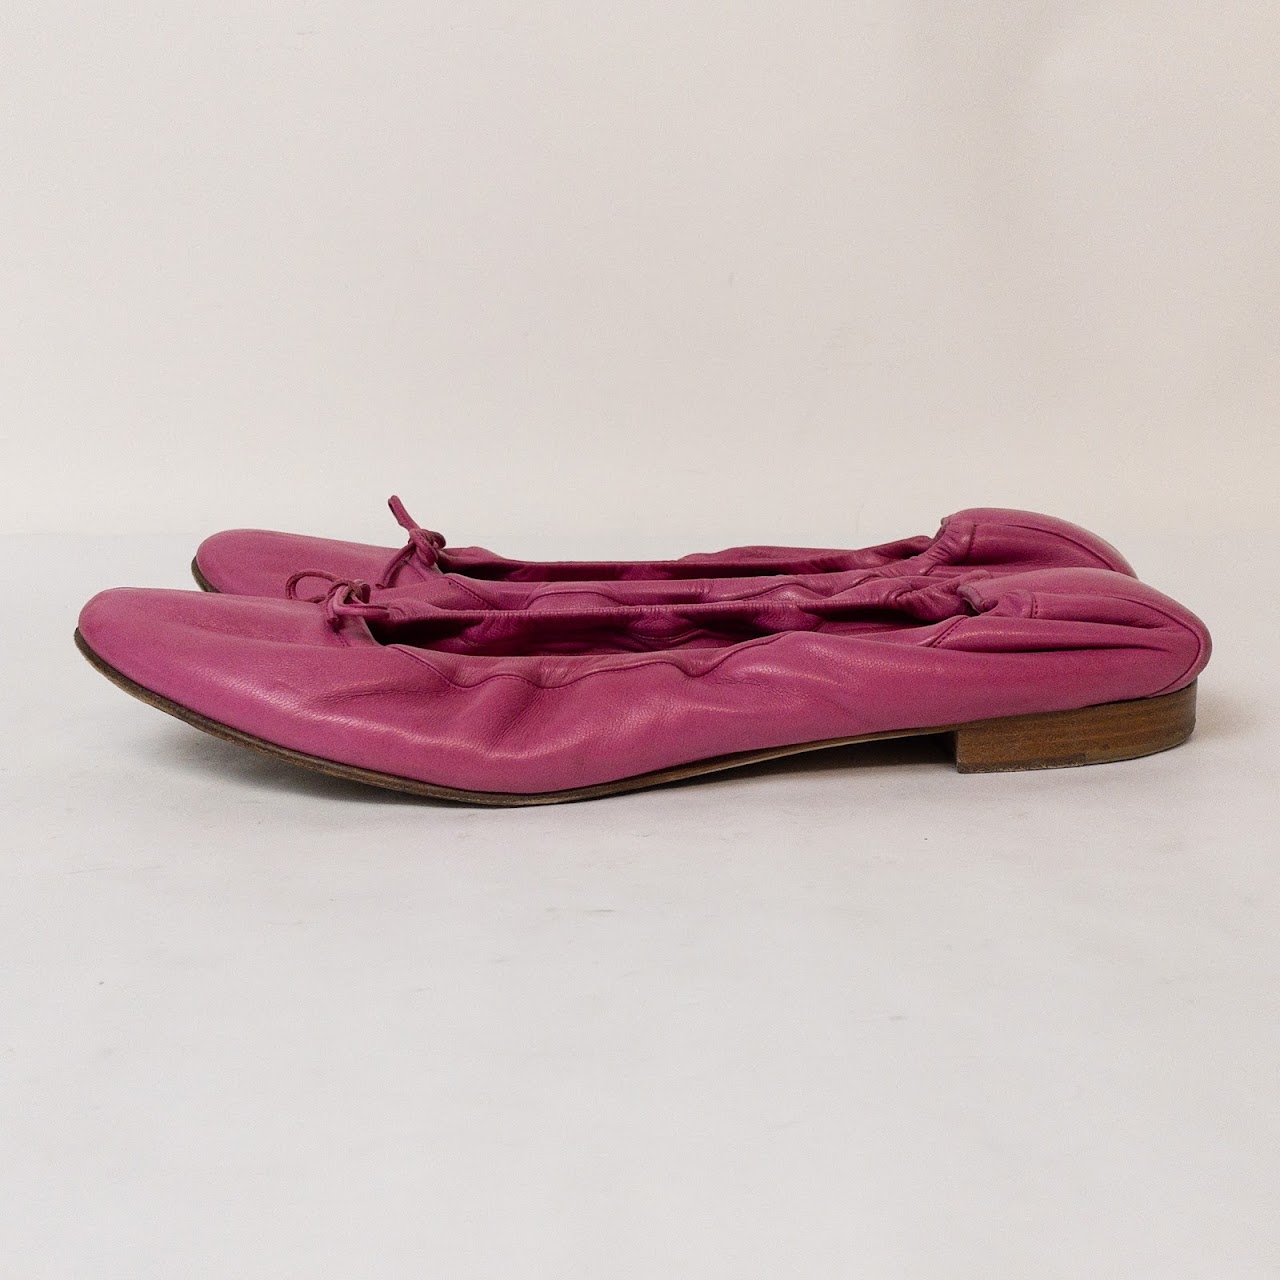 Manolo Blahnik Pink Leather Flats